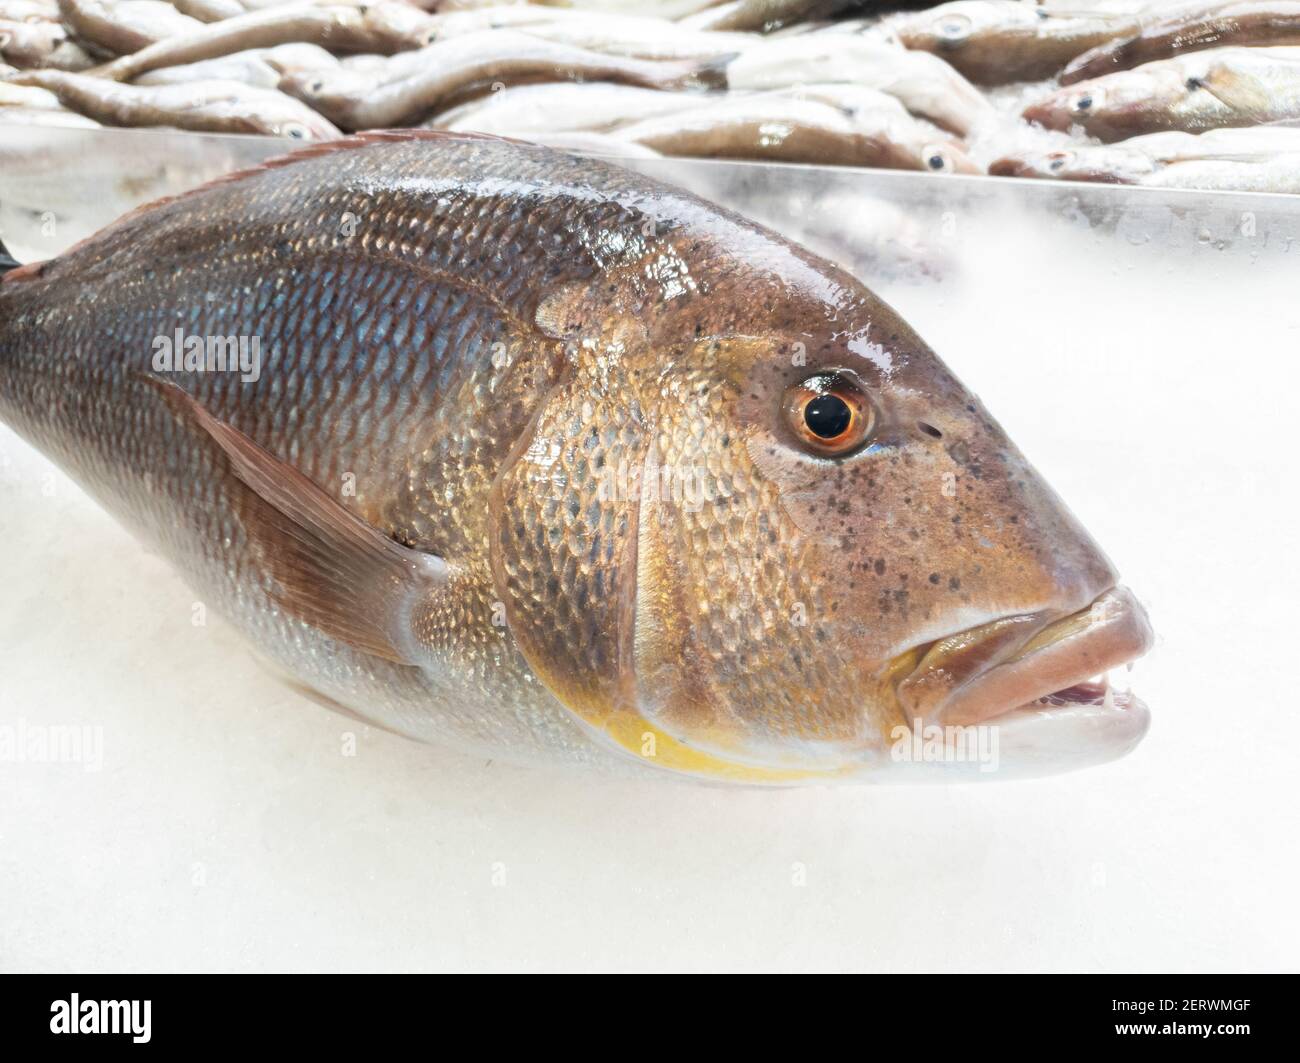 A big dentex in a fish market on ice. Common dentex (Dentex dentex). Stock Photo